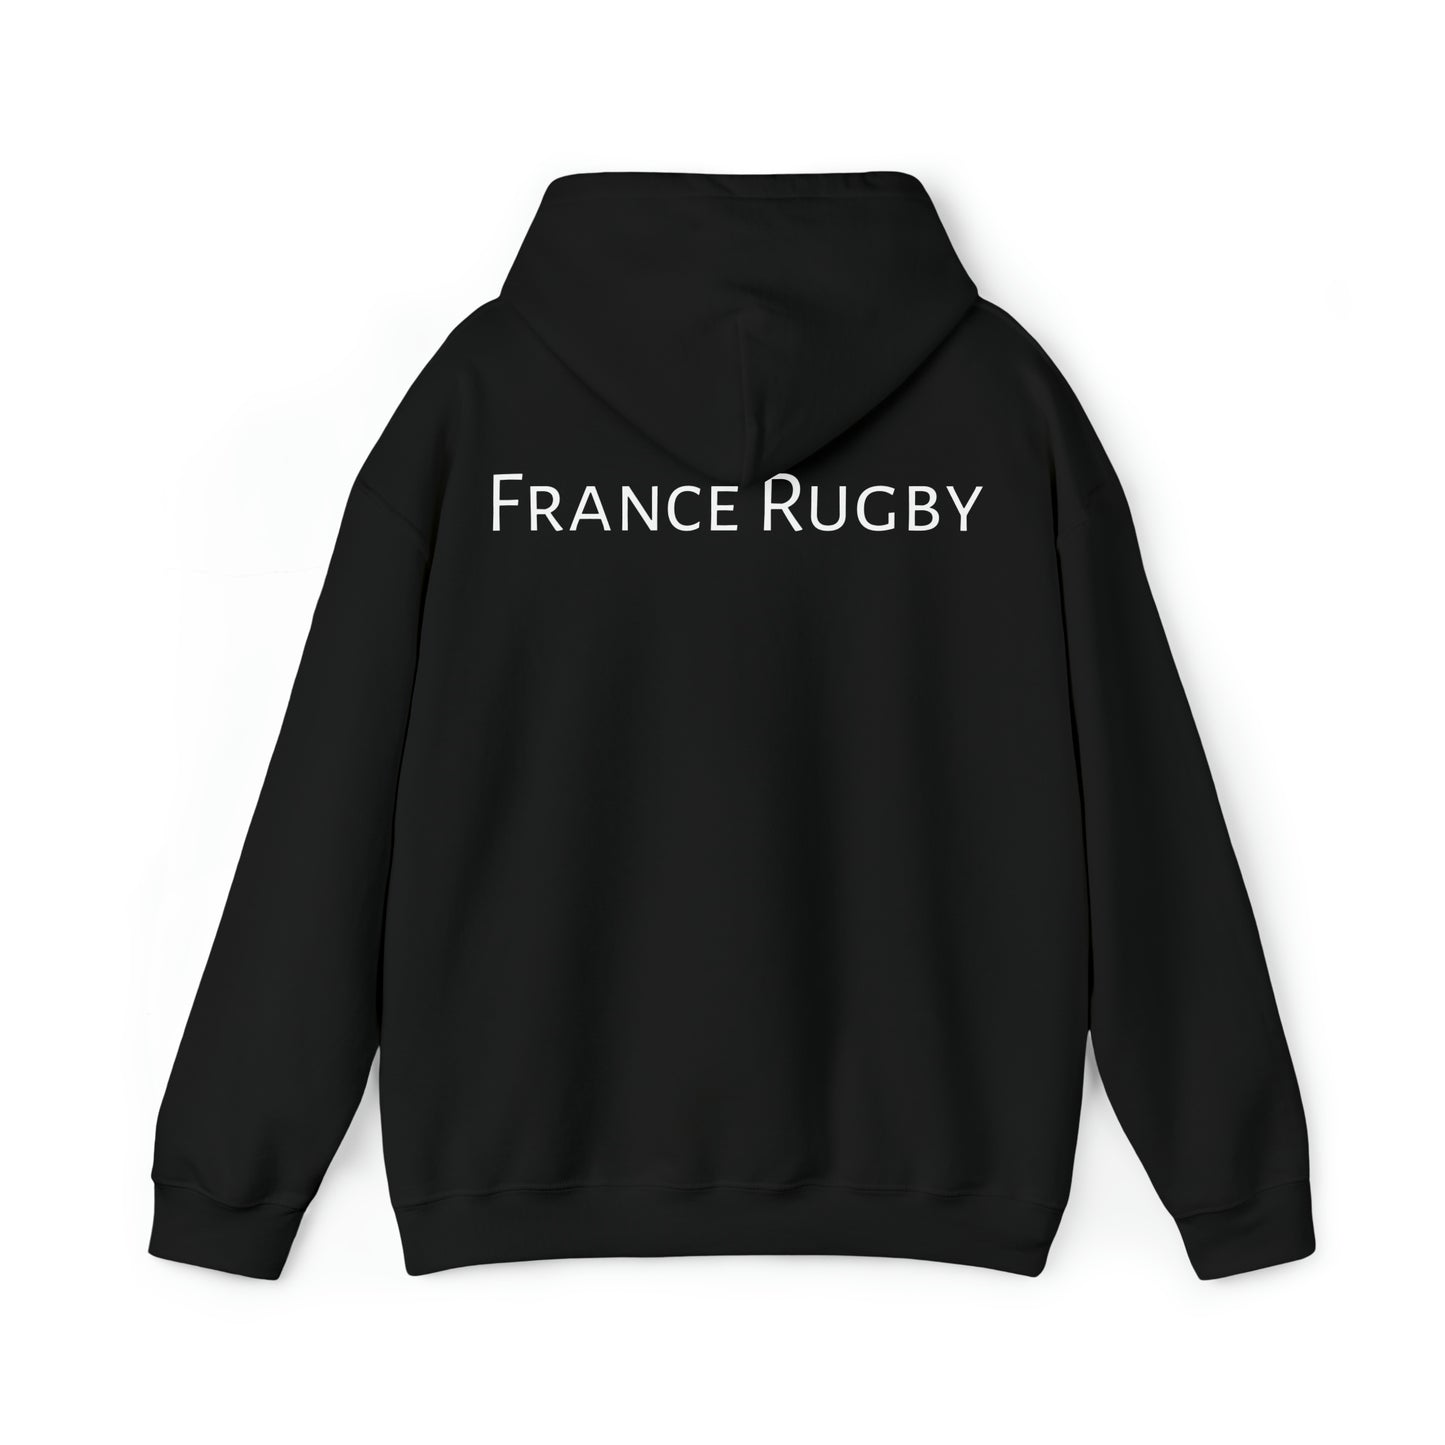 France World Cup Photoshoot - dark hoodies